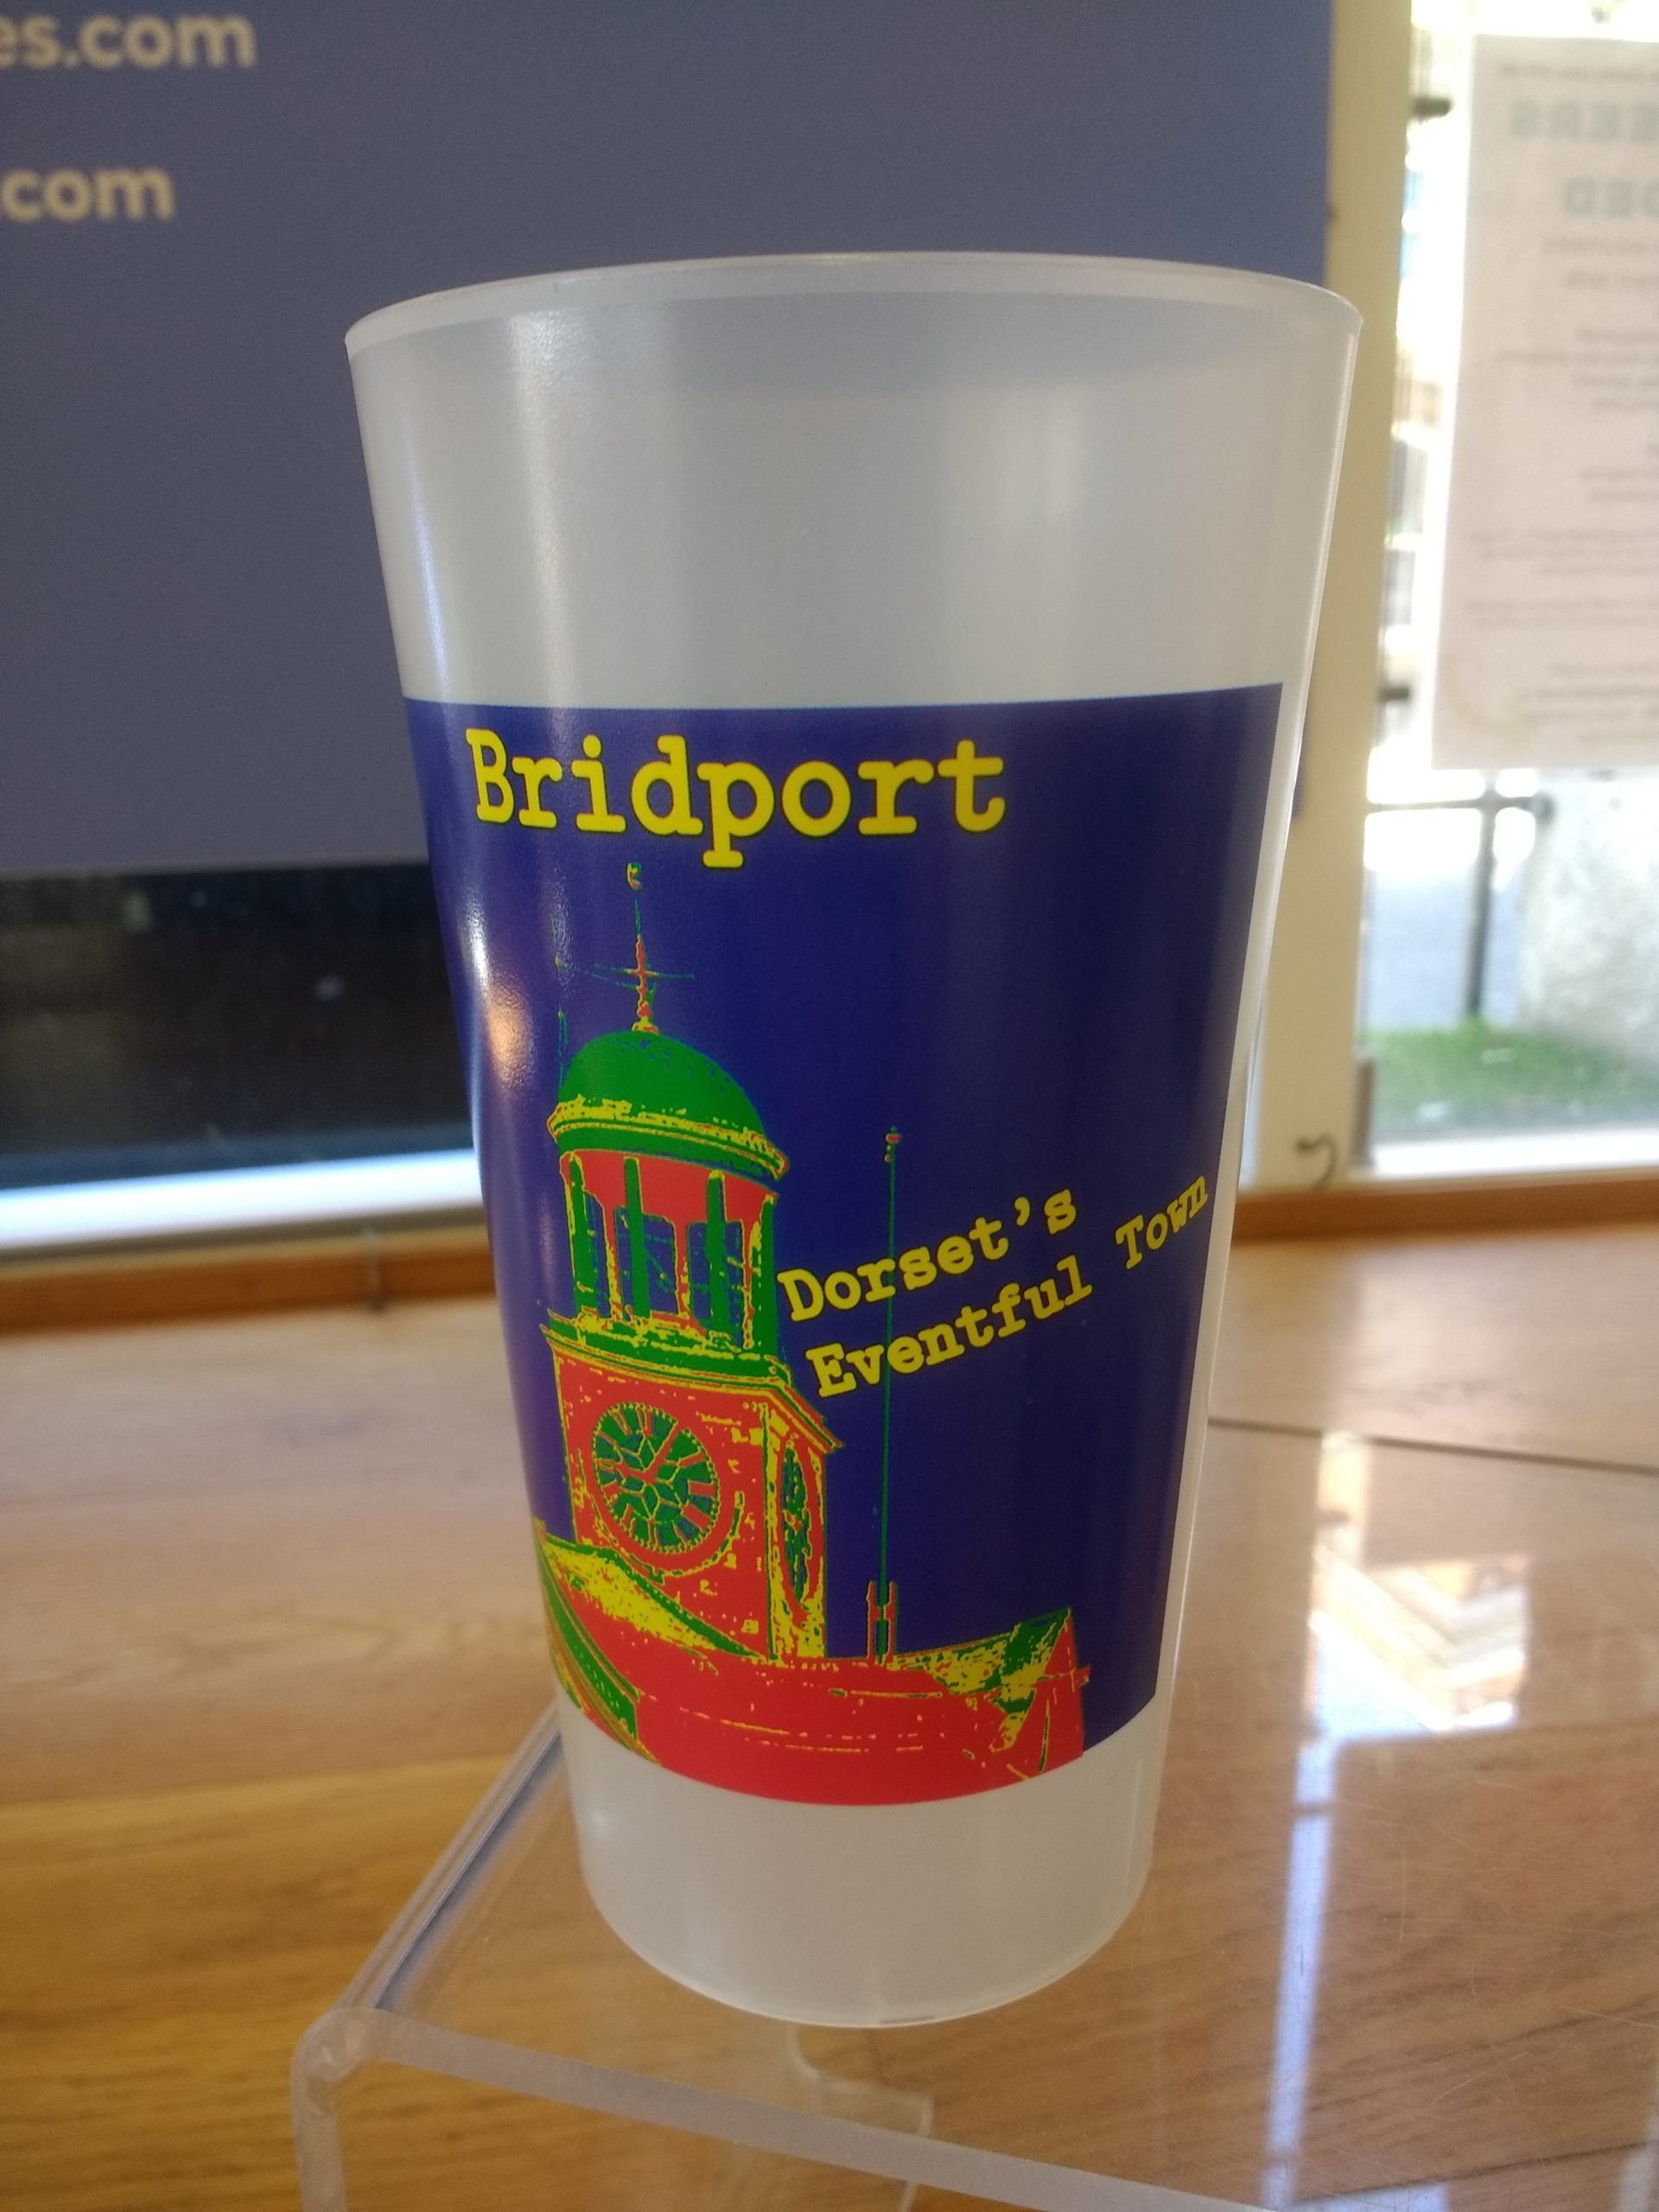 The Bridport Festival Cup